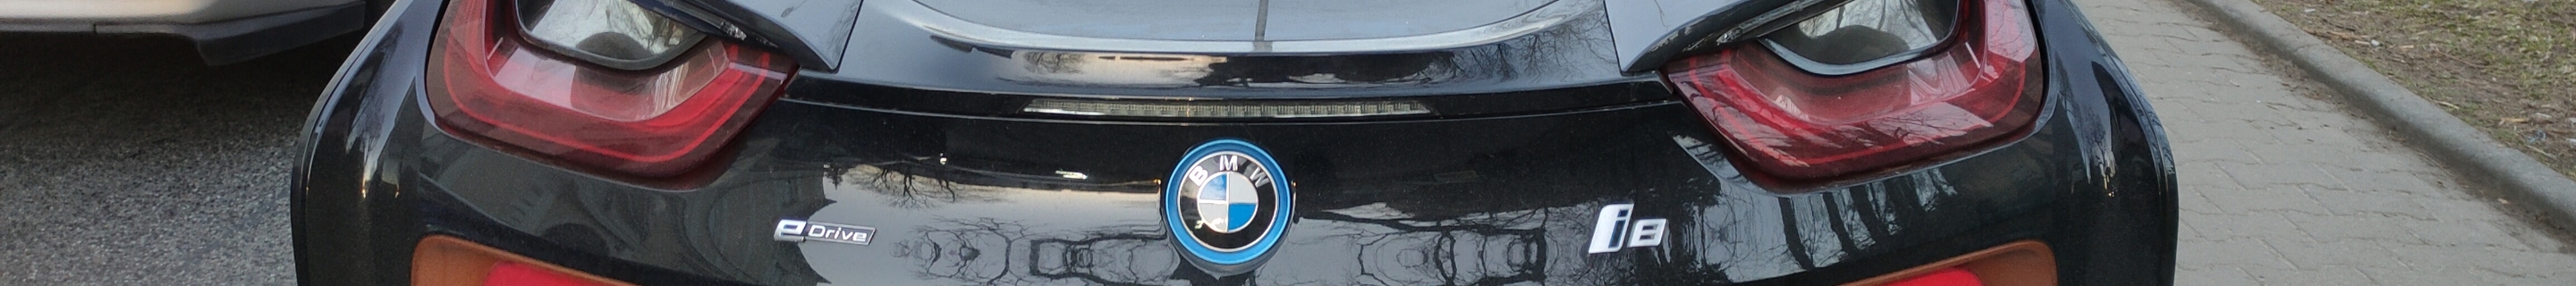 BMW i8 Ultimate Sophisto Edition